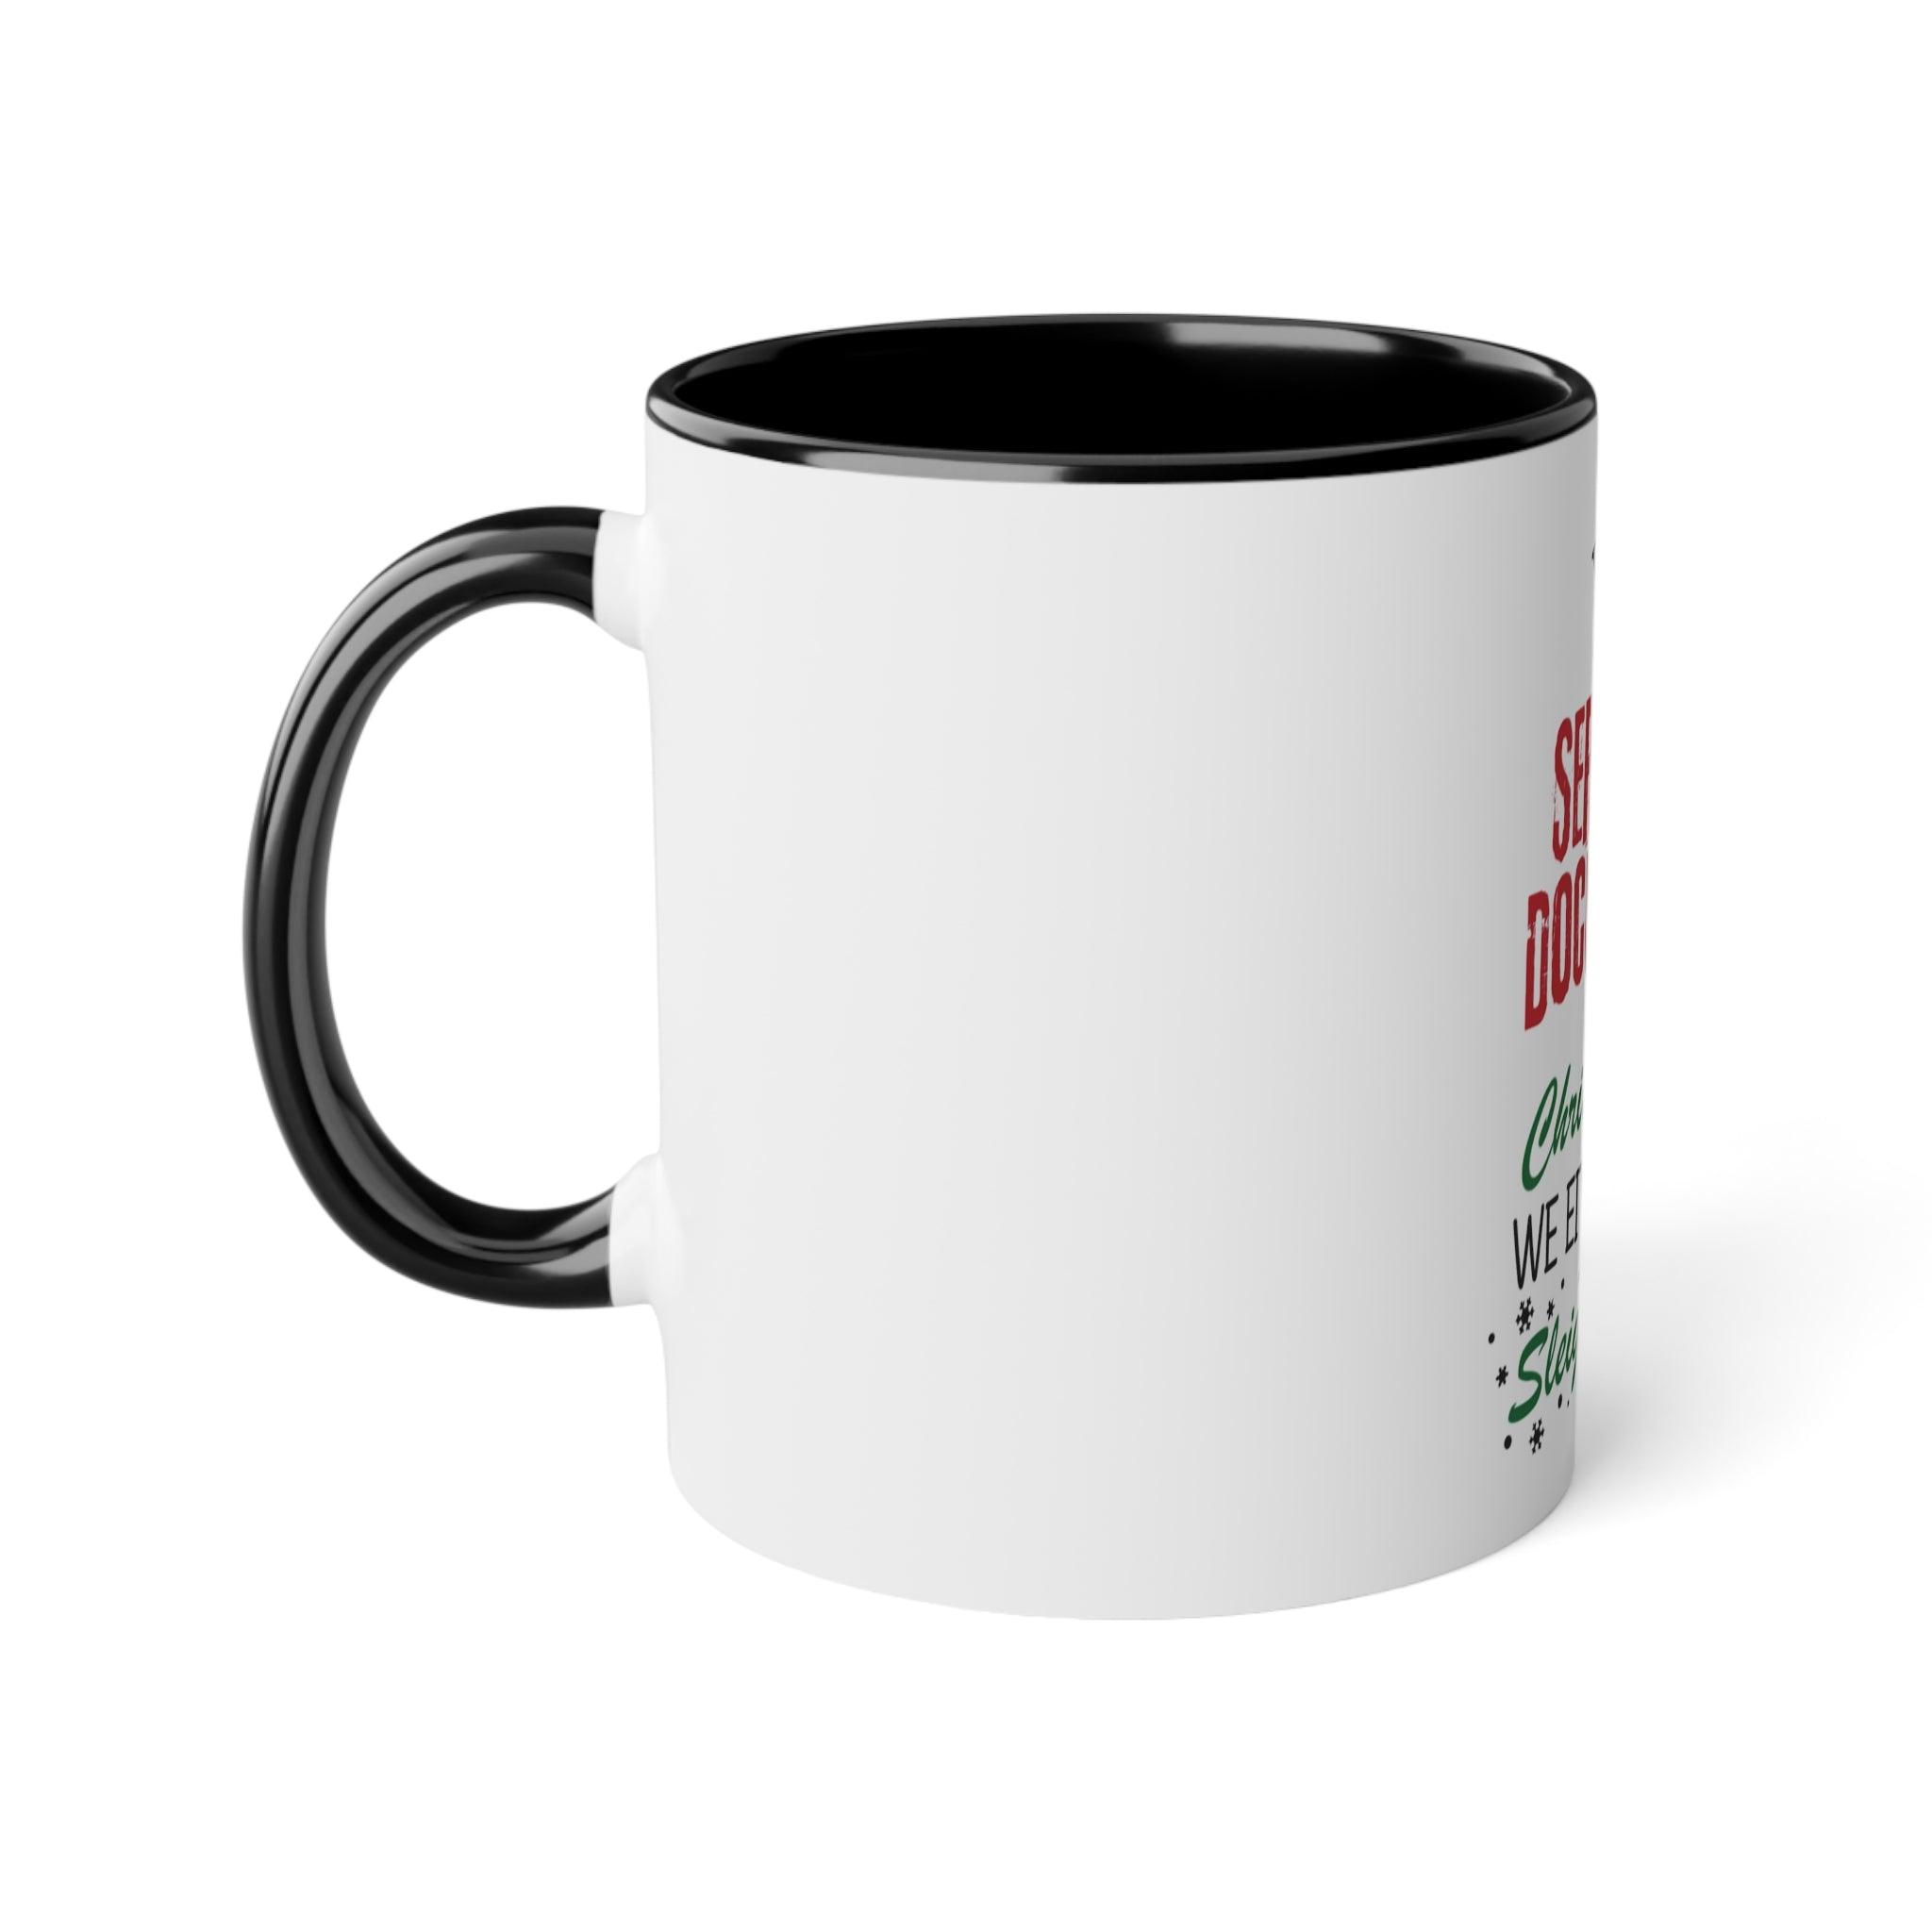 Sleighin' or Slayin' 11 oz Ceramic Coffee Tea Mug